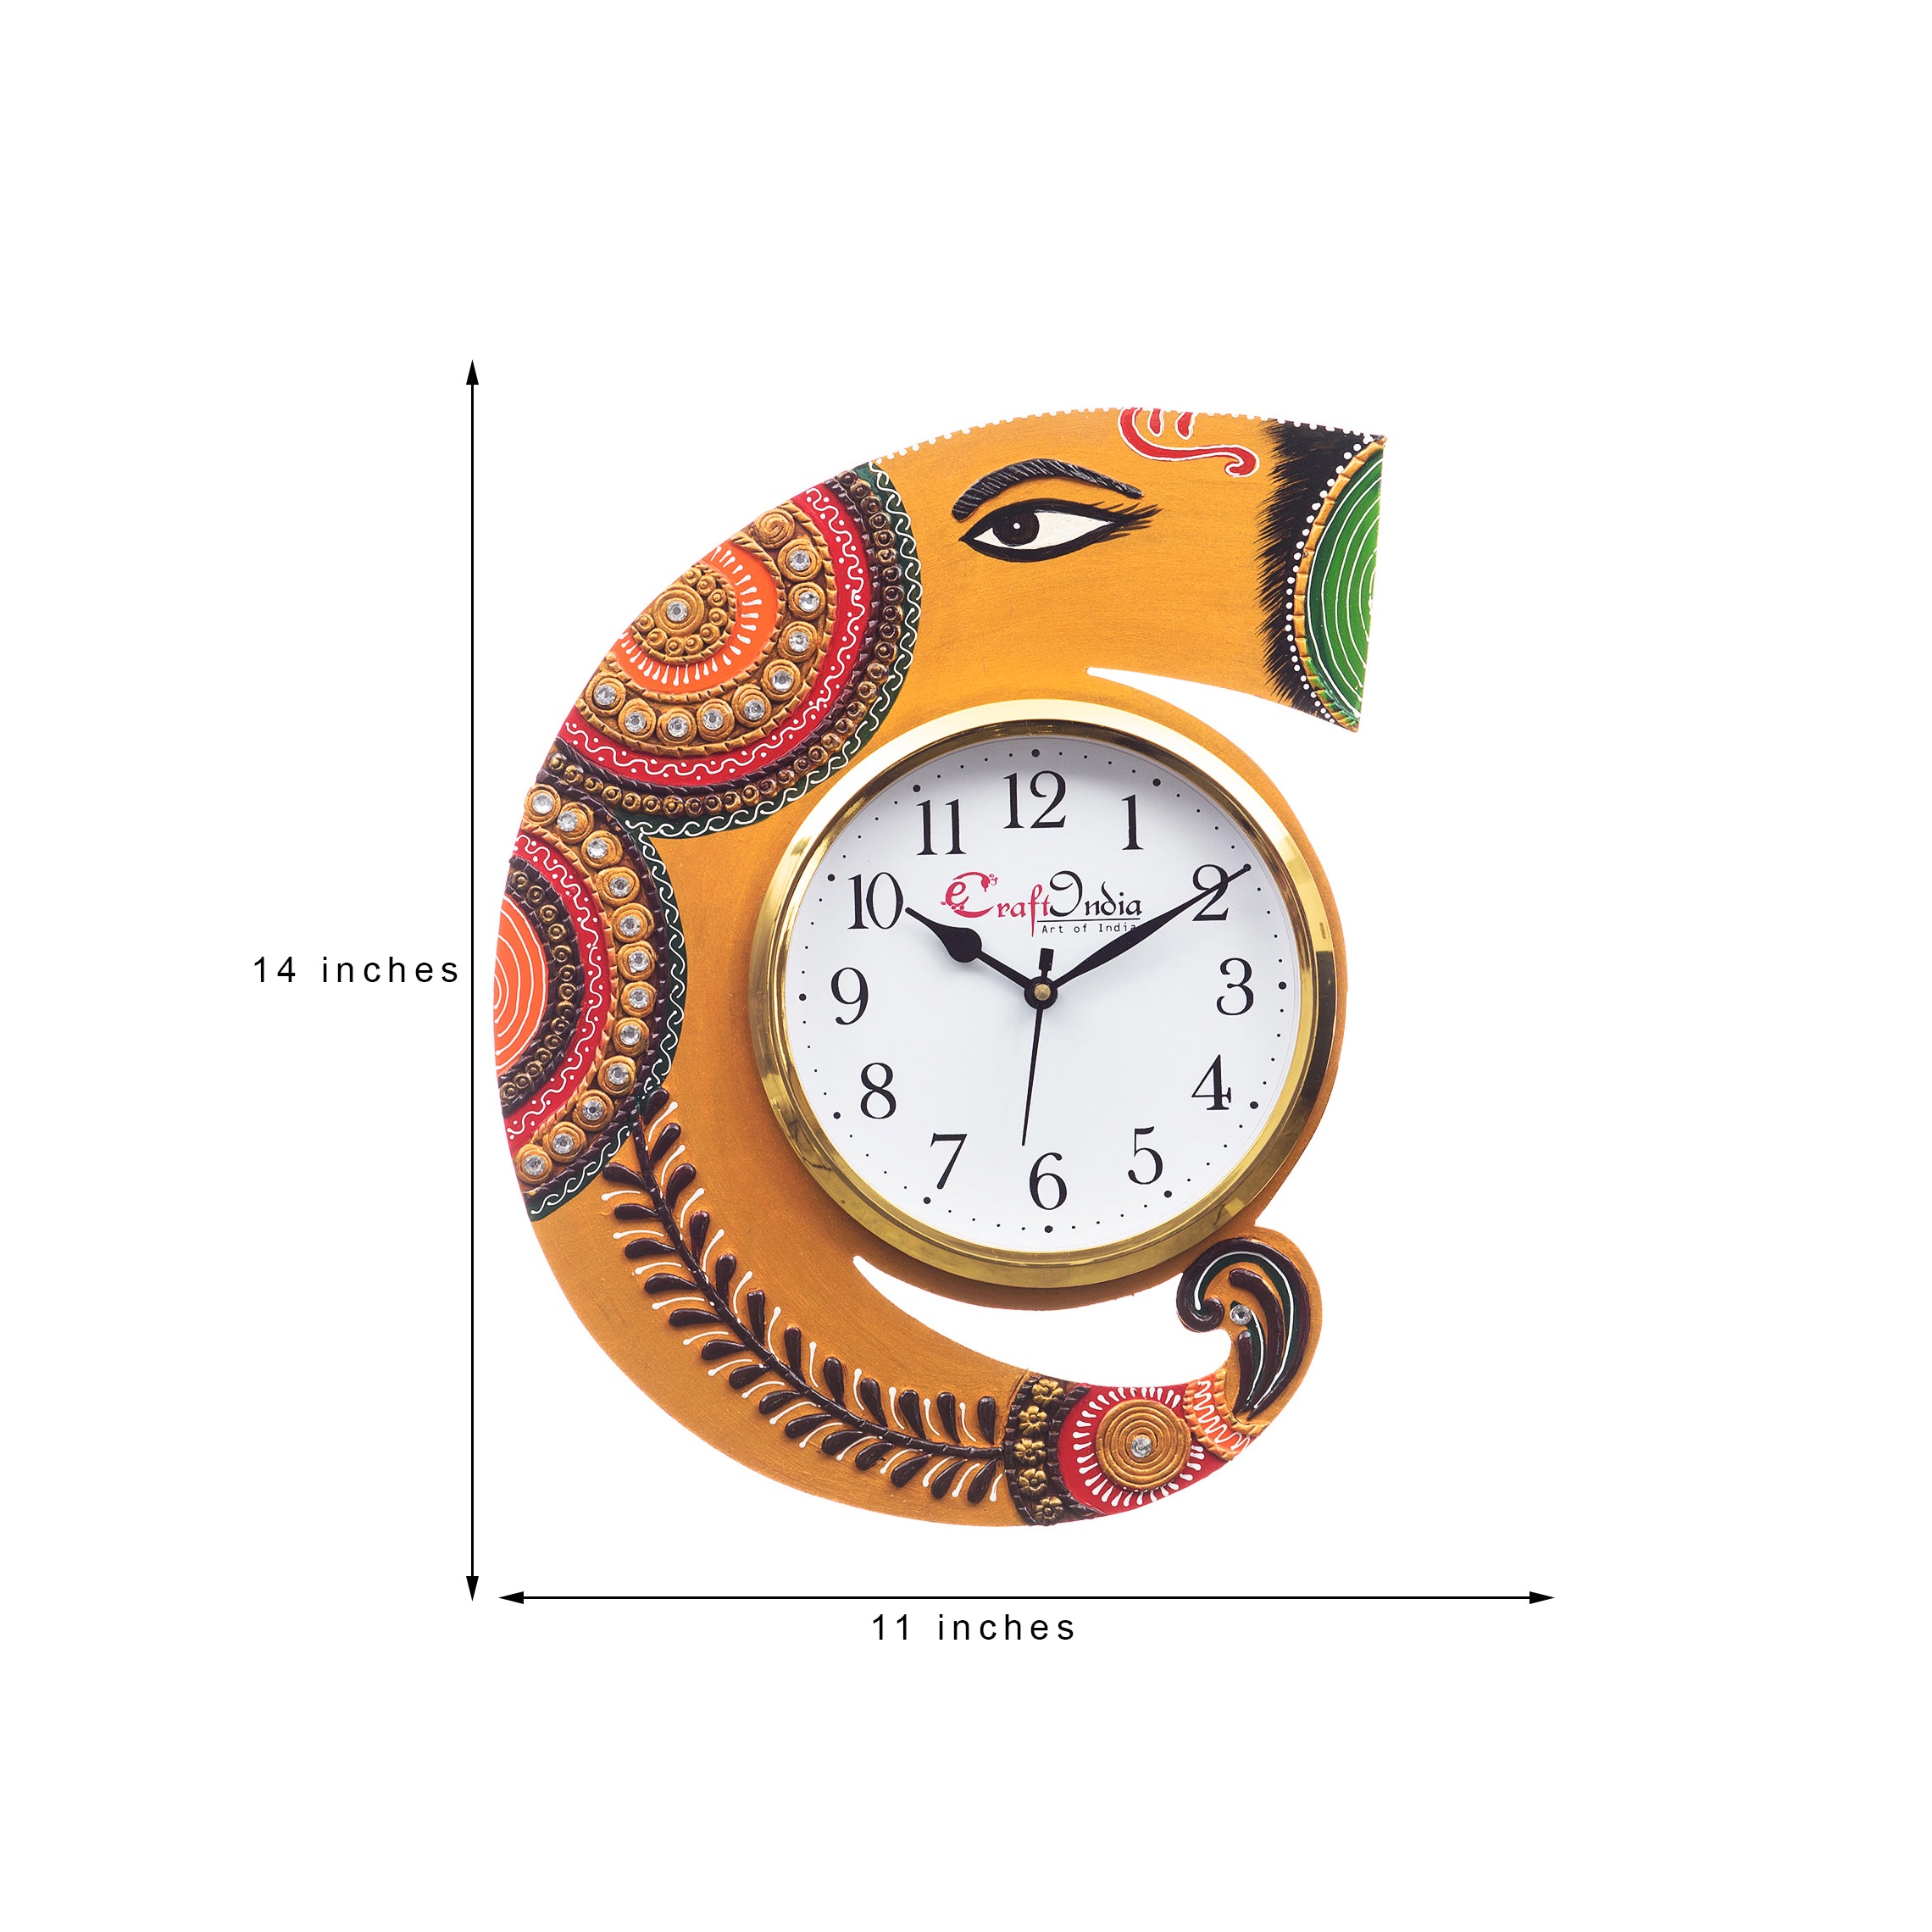 Handicraft Lord Ganesha Analog Wall Clock (Yellow & Green, With Glass) 2